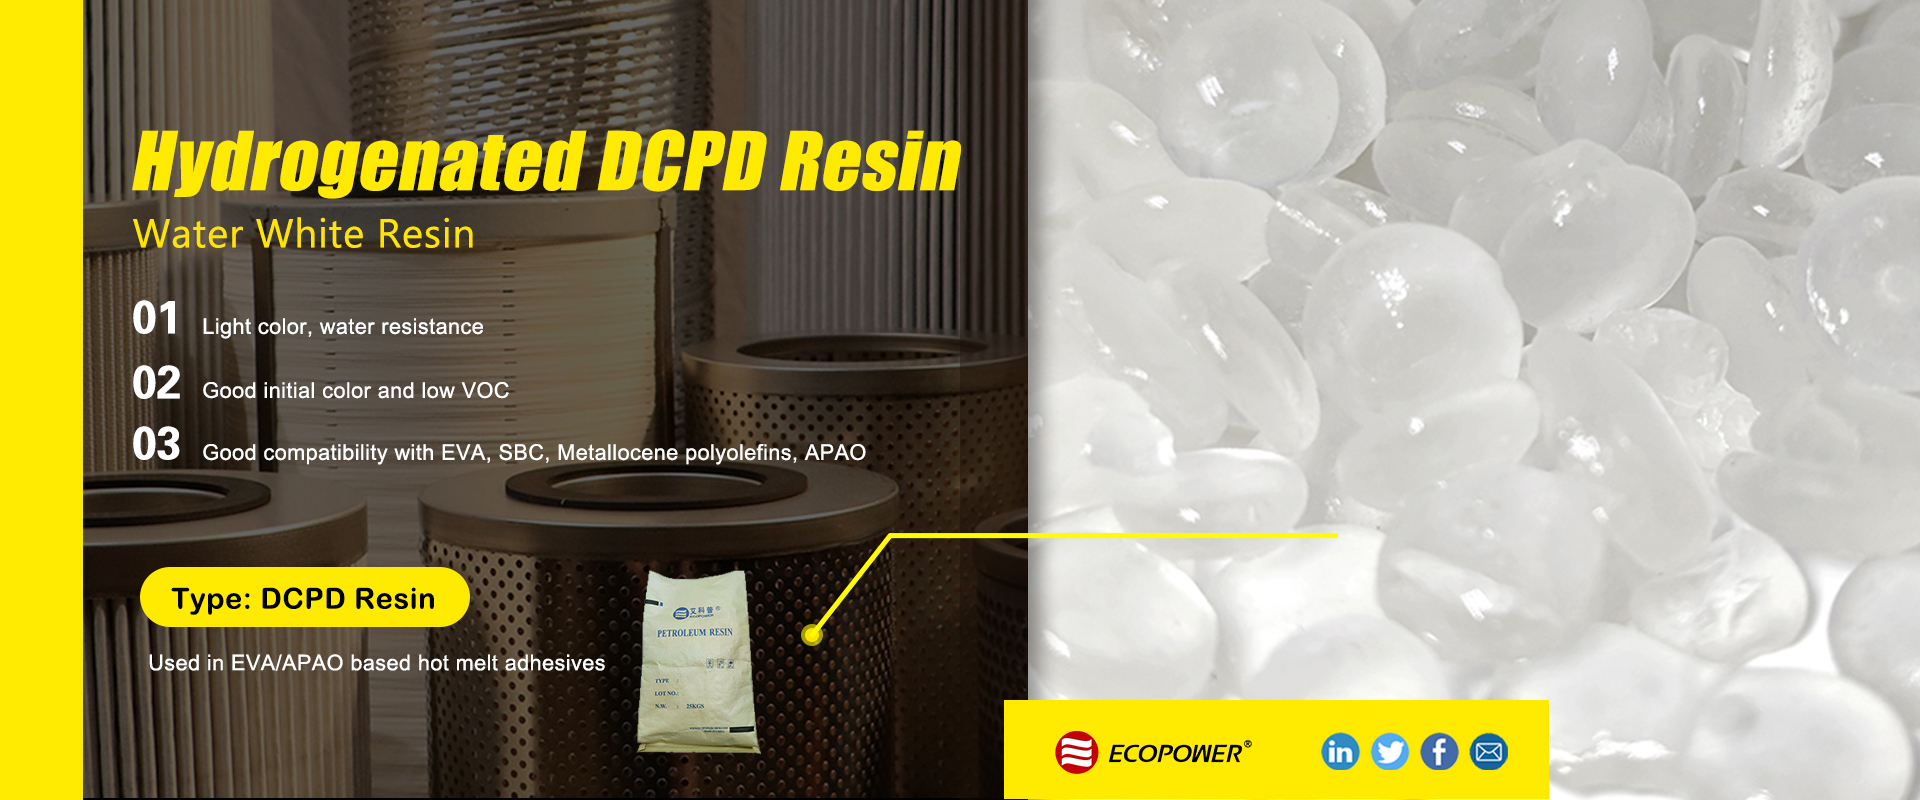 DCPD RESIN water white resin